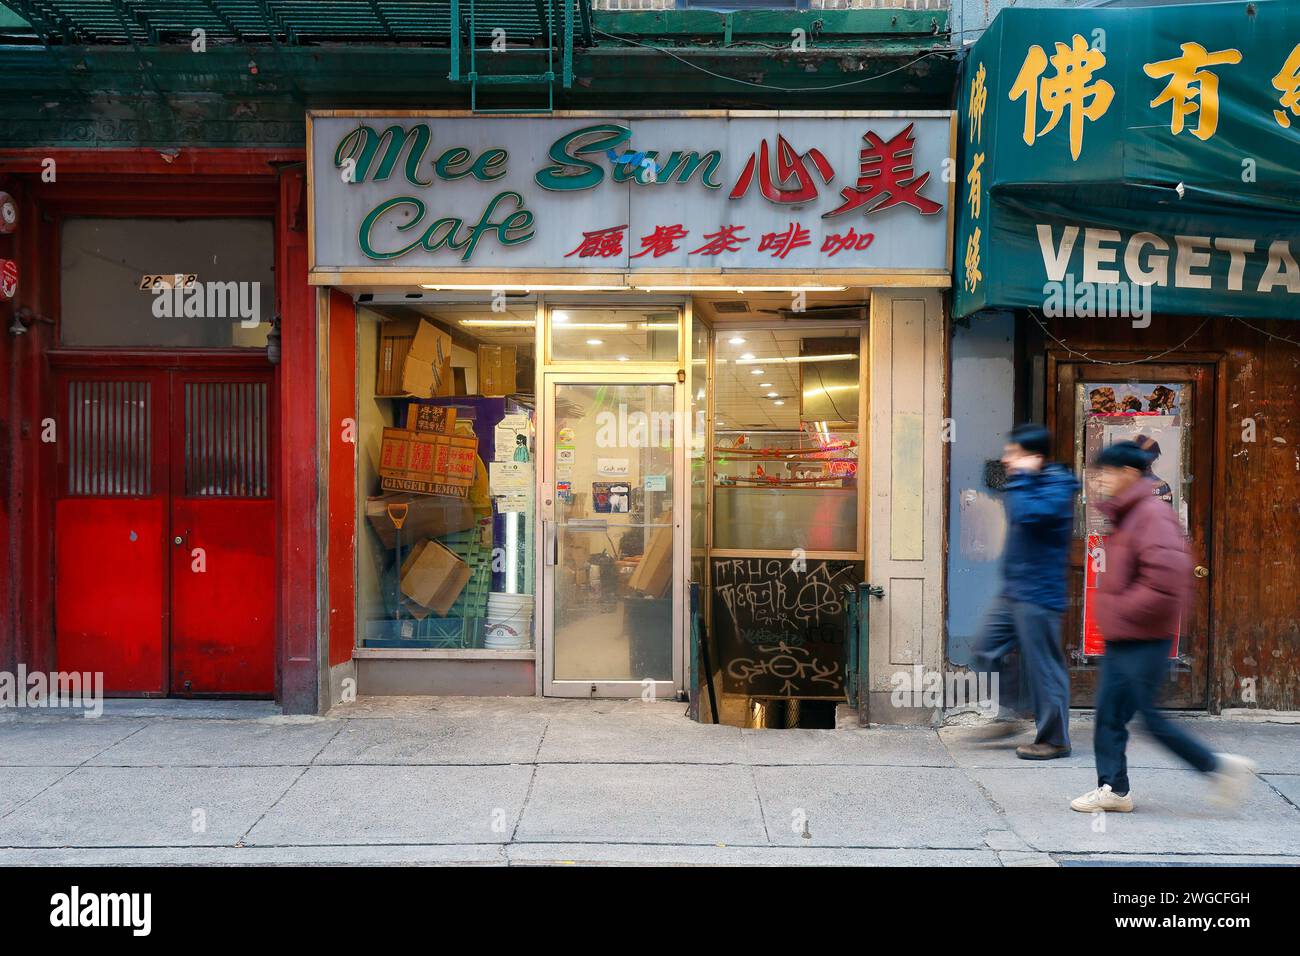 Mee Sum Cafe 美心, 26 Pell St, New York, New York, New York, New York, davanti a una caffetteria nella Chinatown di Manhattan. Foto Stock